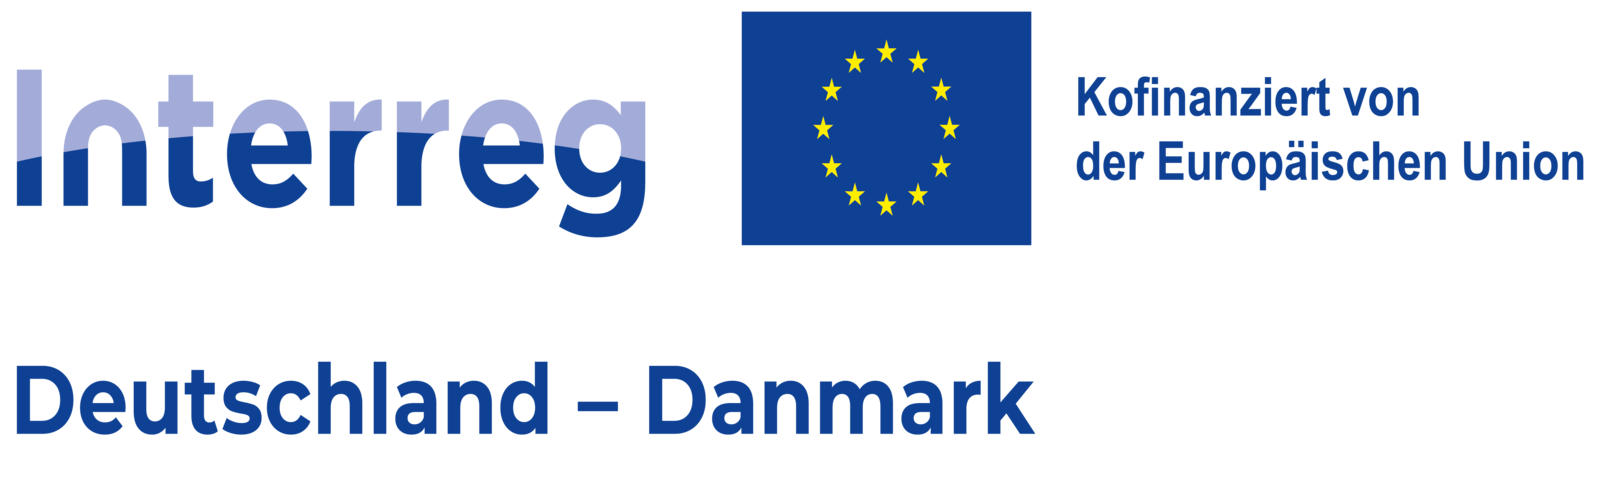 Logo Interreg Deutschland-Dänemark 